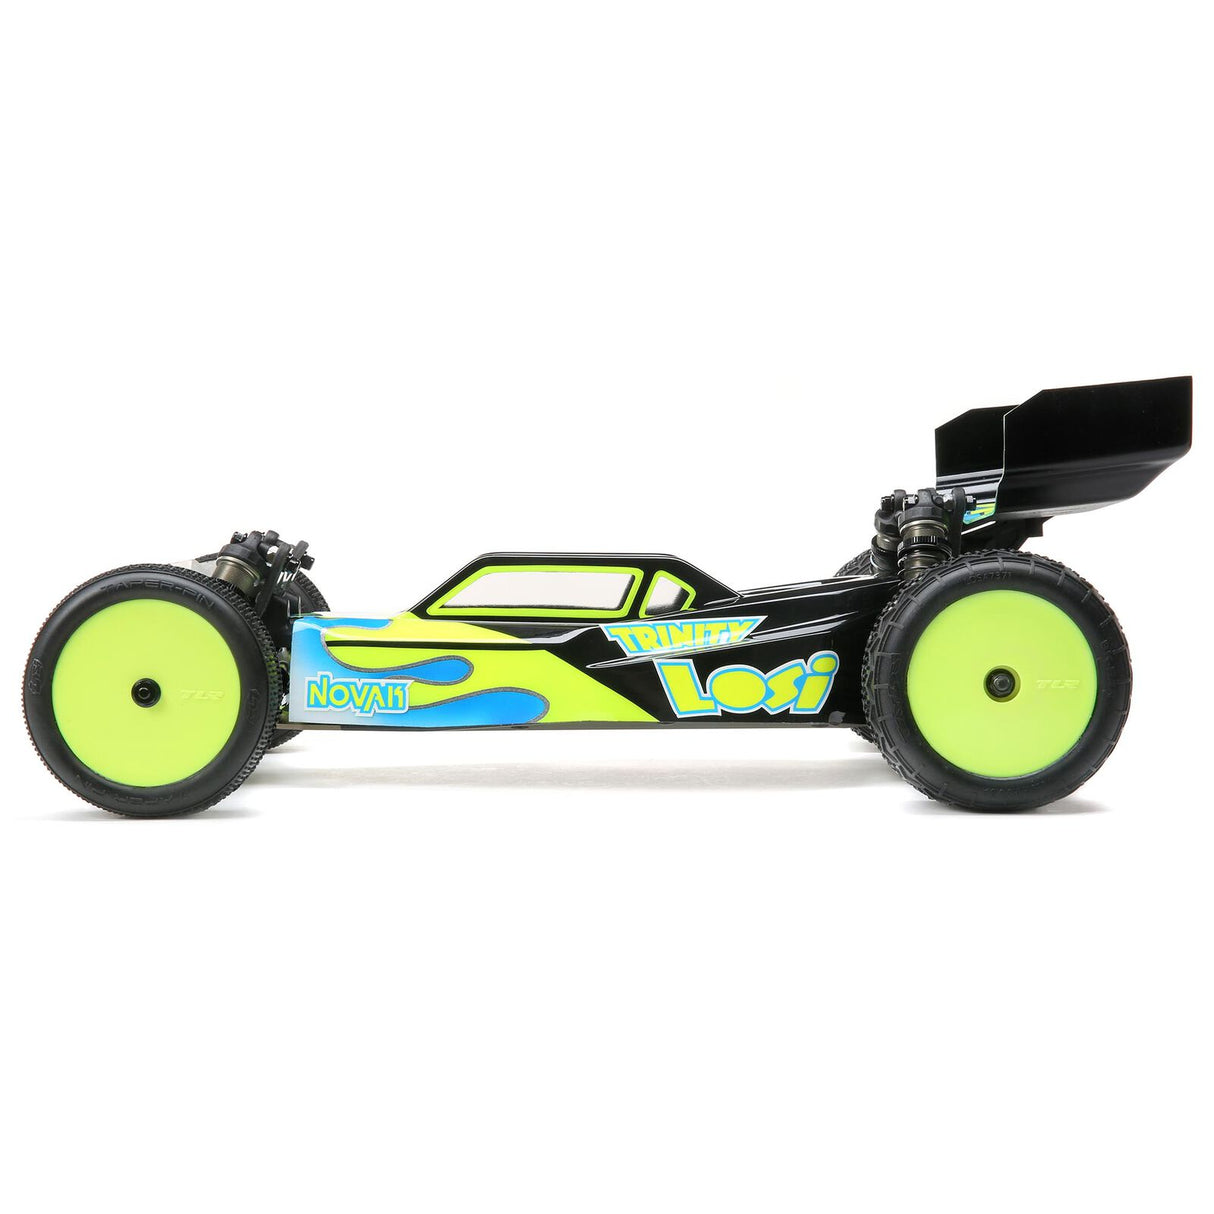 TEAM LOSI RACING TLR03022 1/10 22 5.0 2WD DC ELITE Race Kit, Dirt/Clay